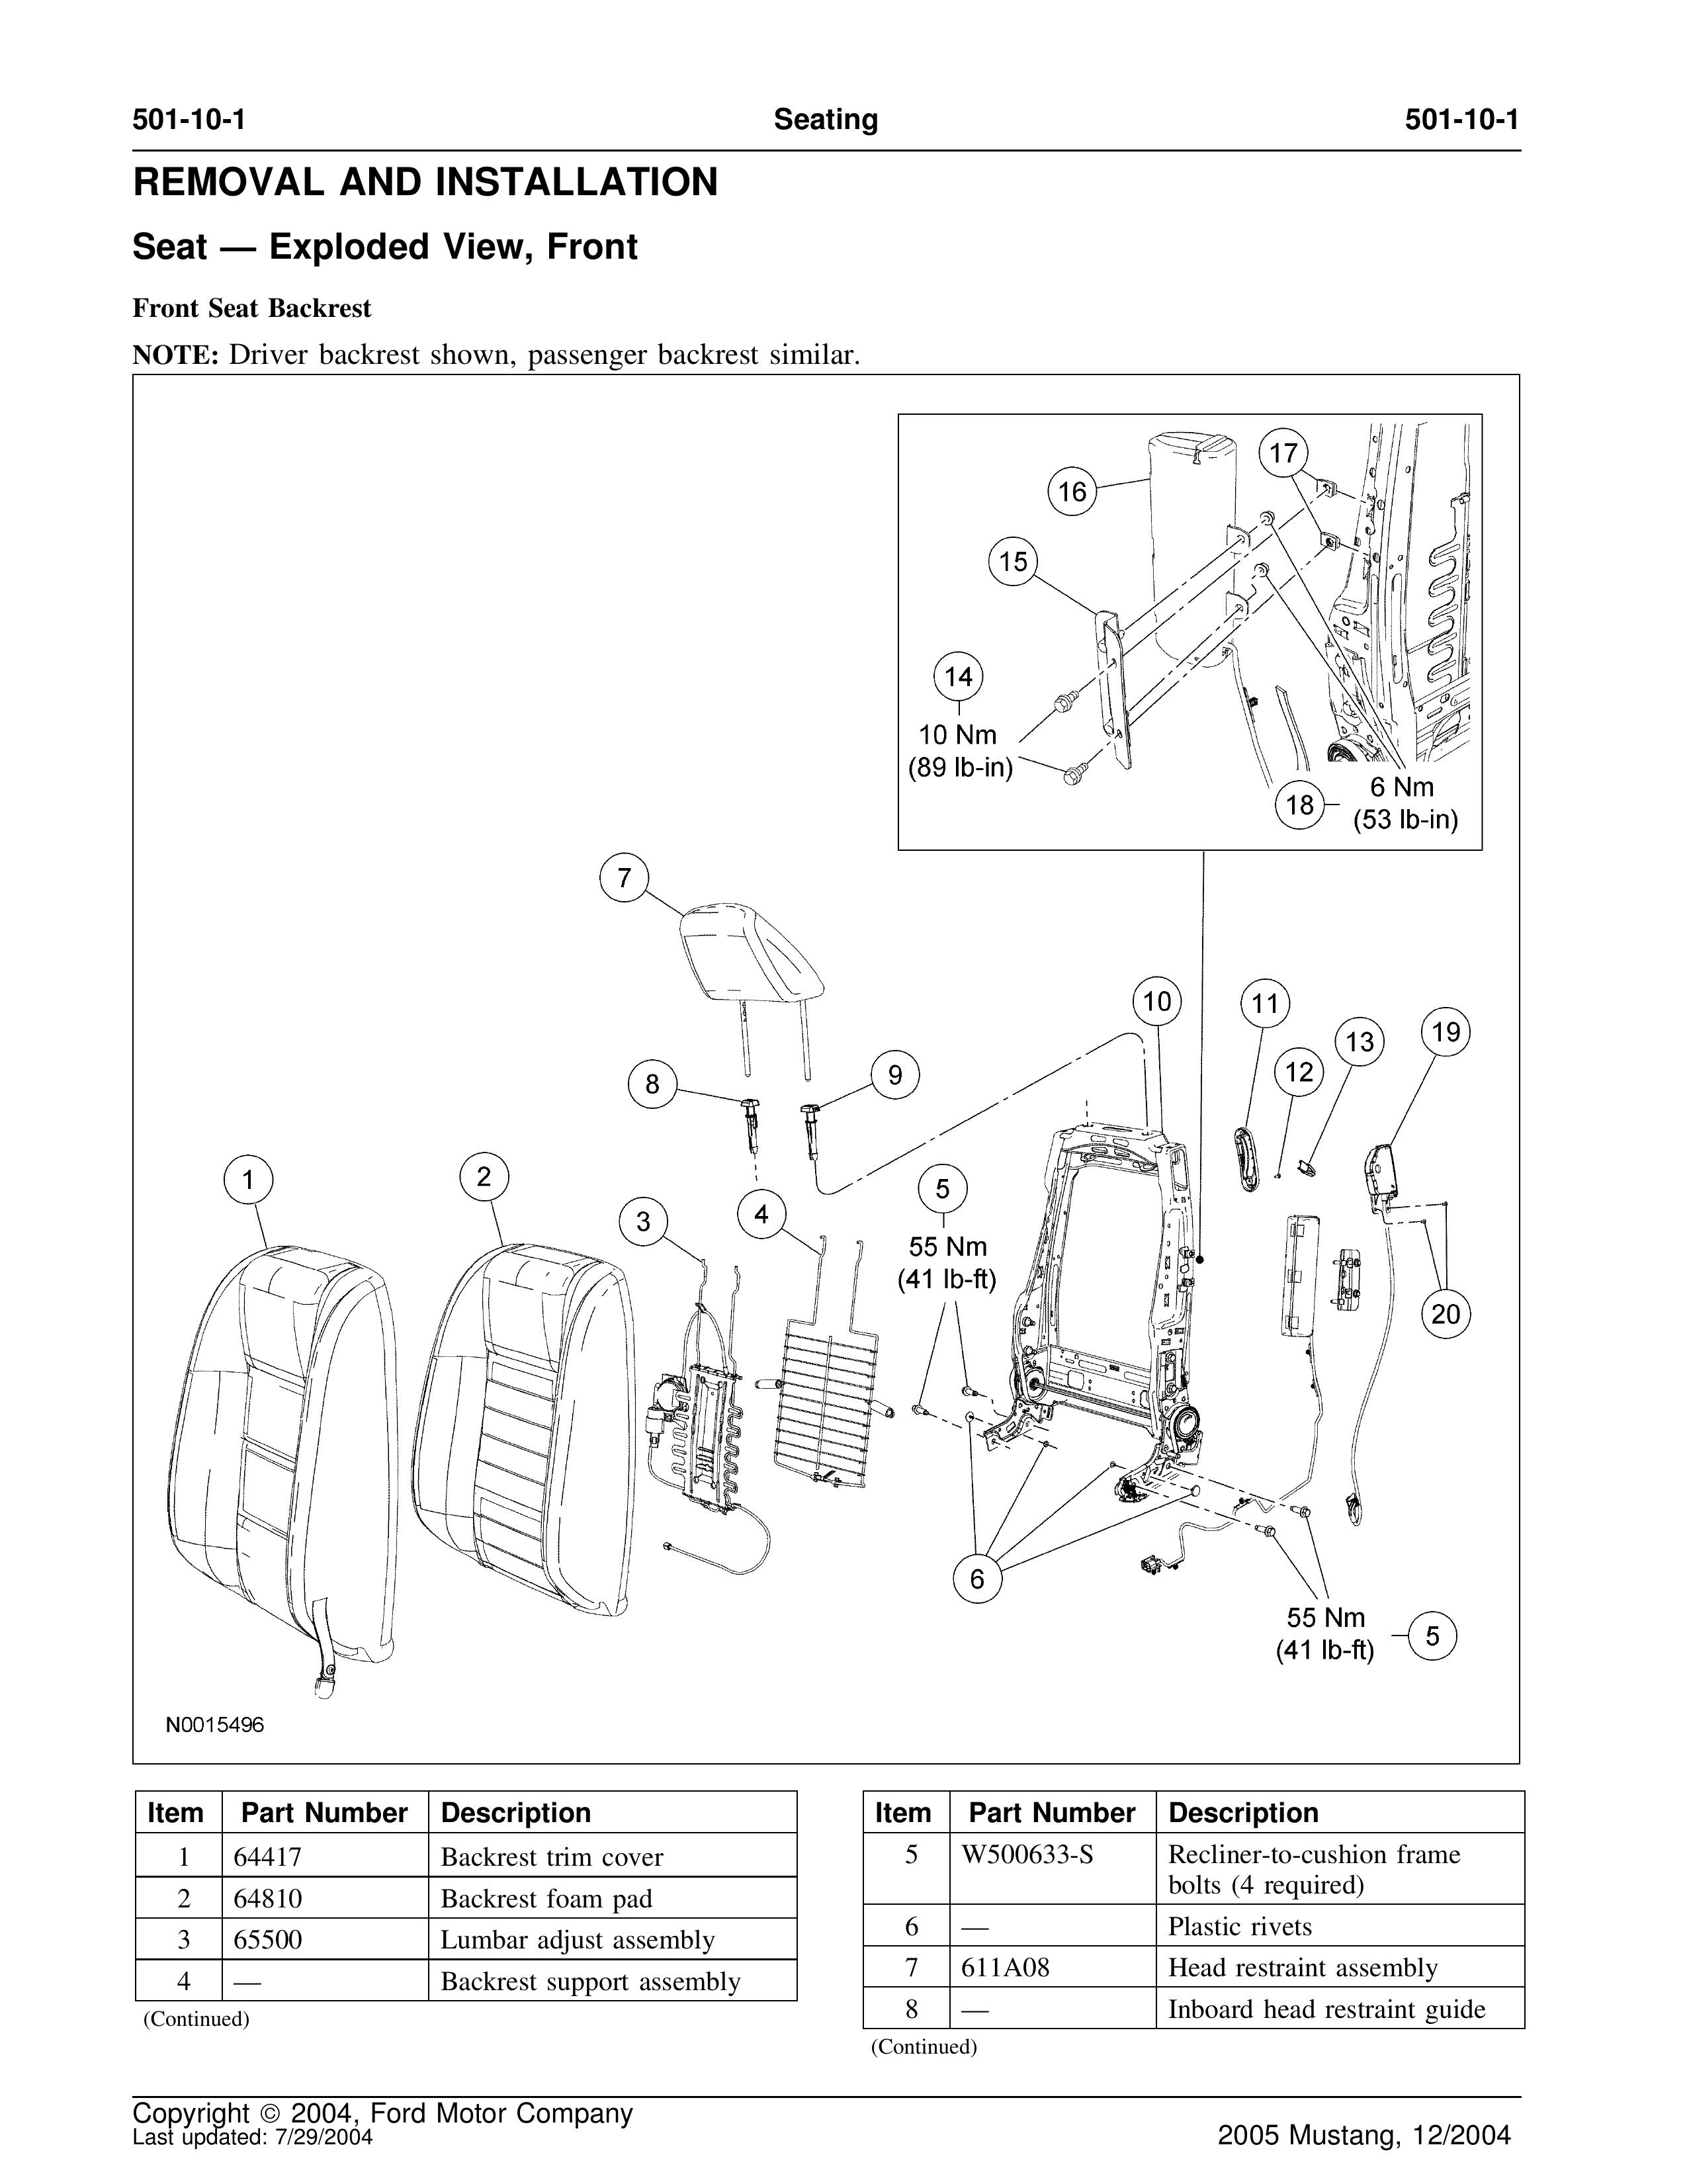 Ford 501-10-1 Wheelchair User Manual